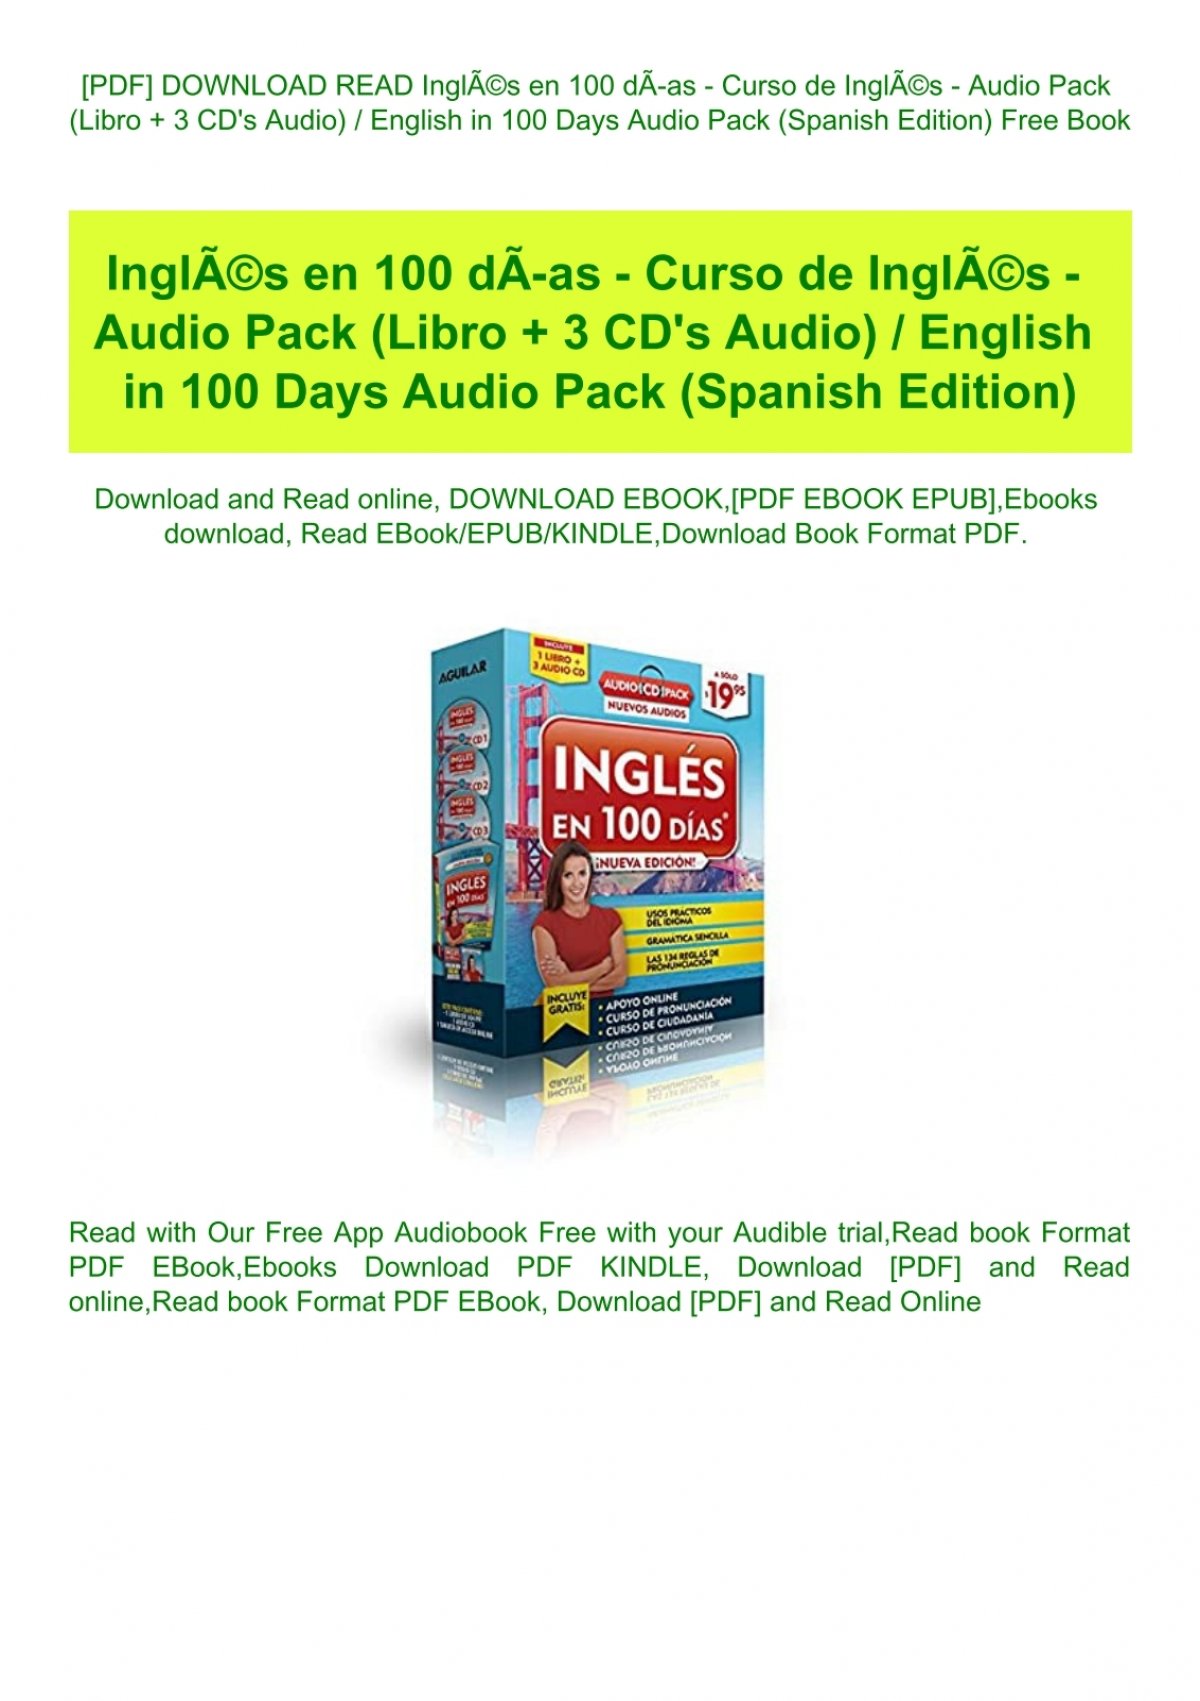 Pdf Download Read Inglaƒa C S En 100 Daƒaas Curso De Inglaƒa C S Audio Pack Libro 3 Cd Amp 039 S Audio English In 100 Days Audio Pack Spanish Edition Free Book